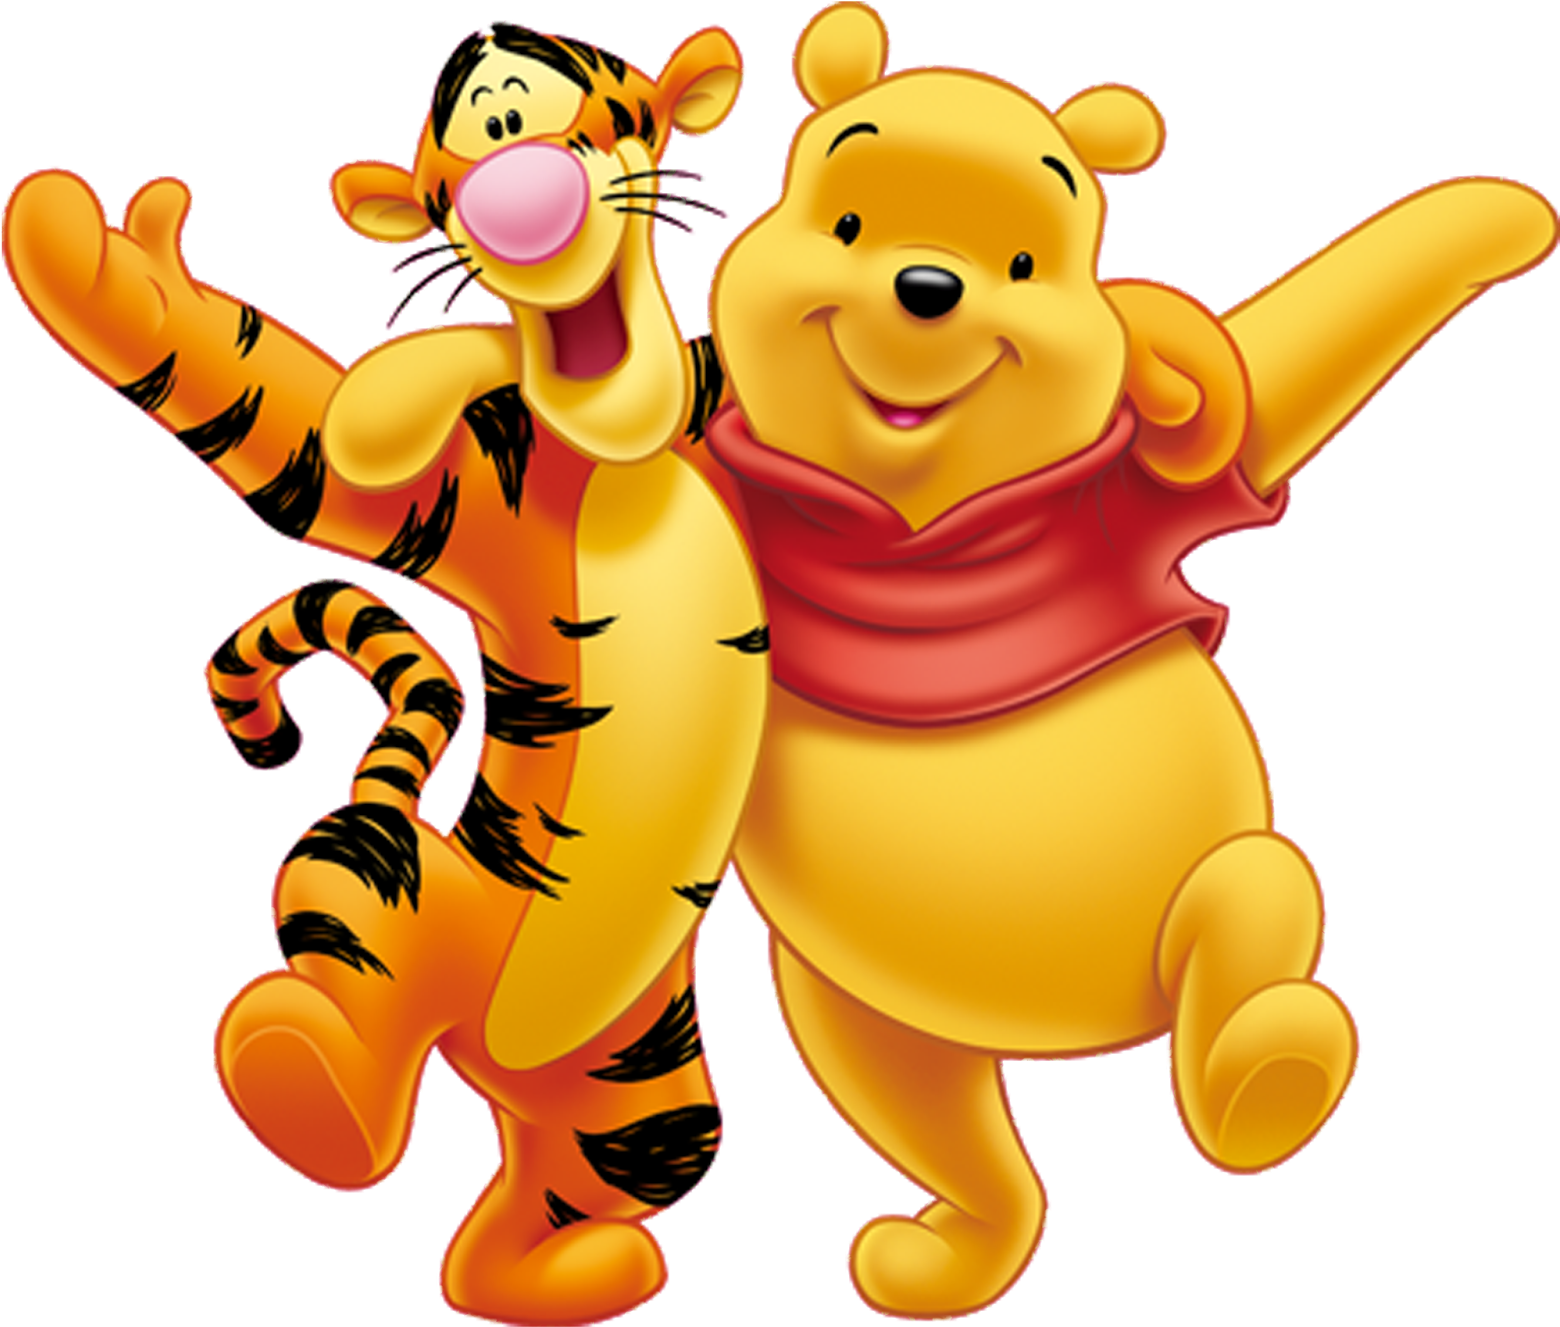 Image De Winnie Pooh - Winnie The Pooh And Tigger - (1600x1600) Png Cli...